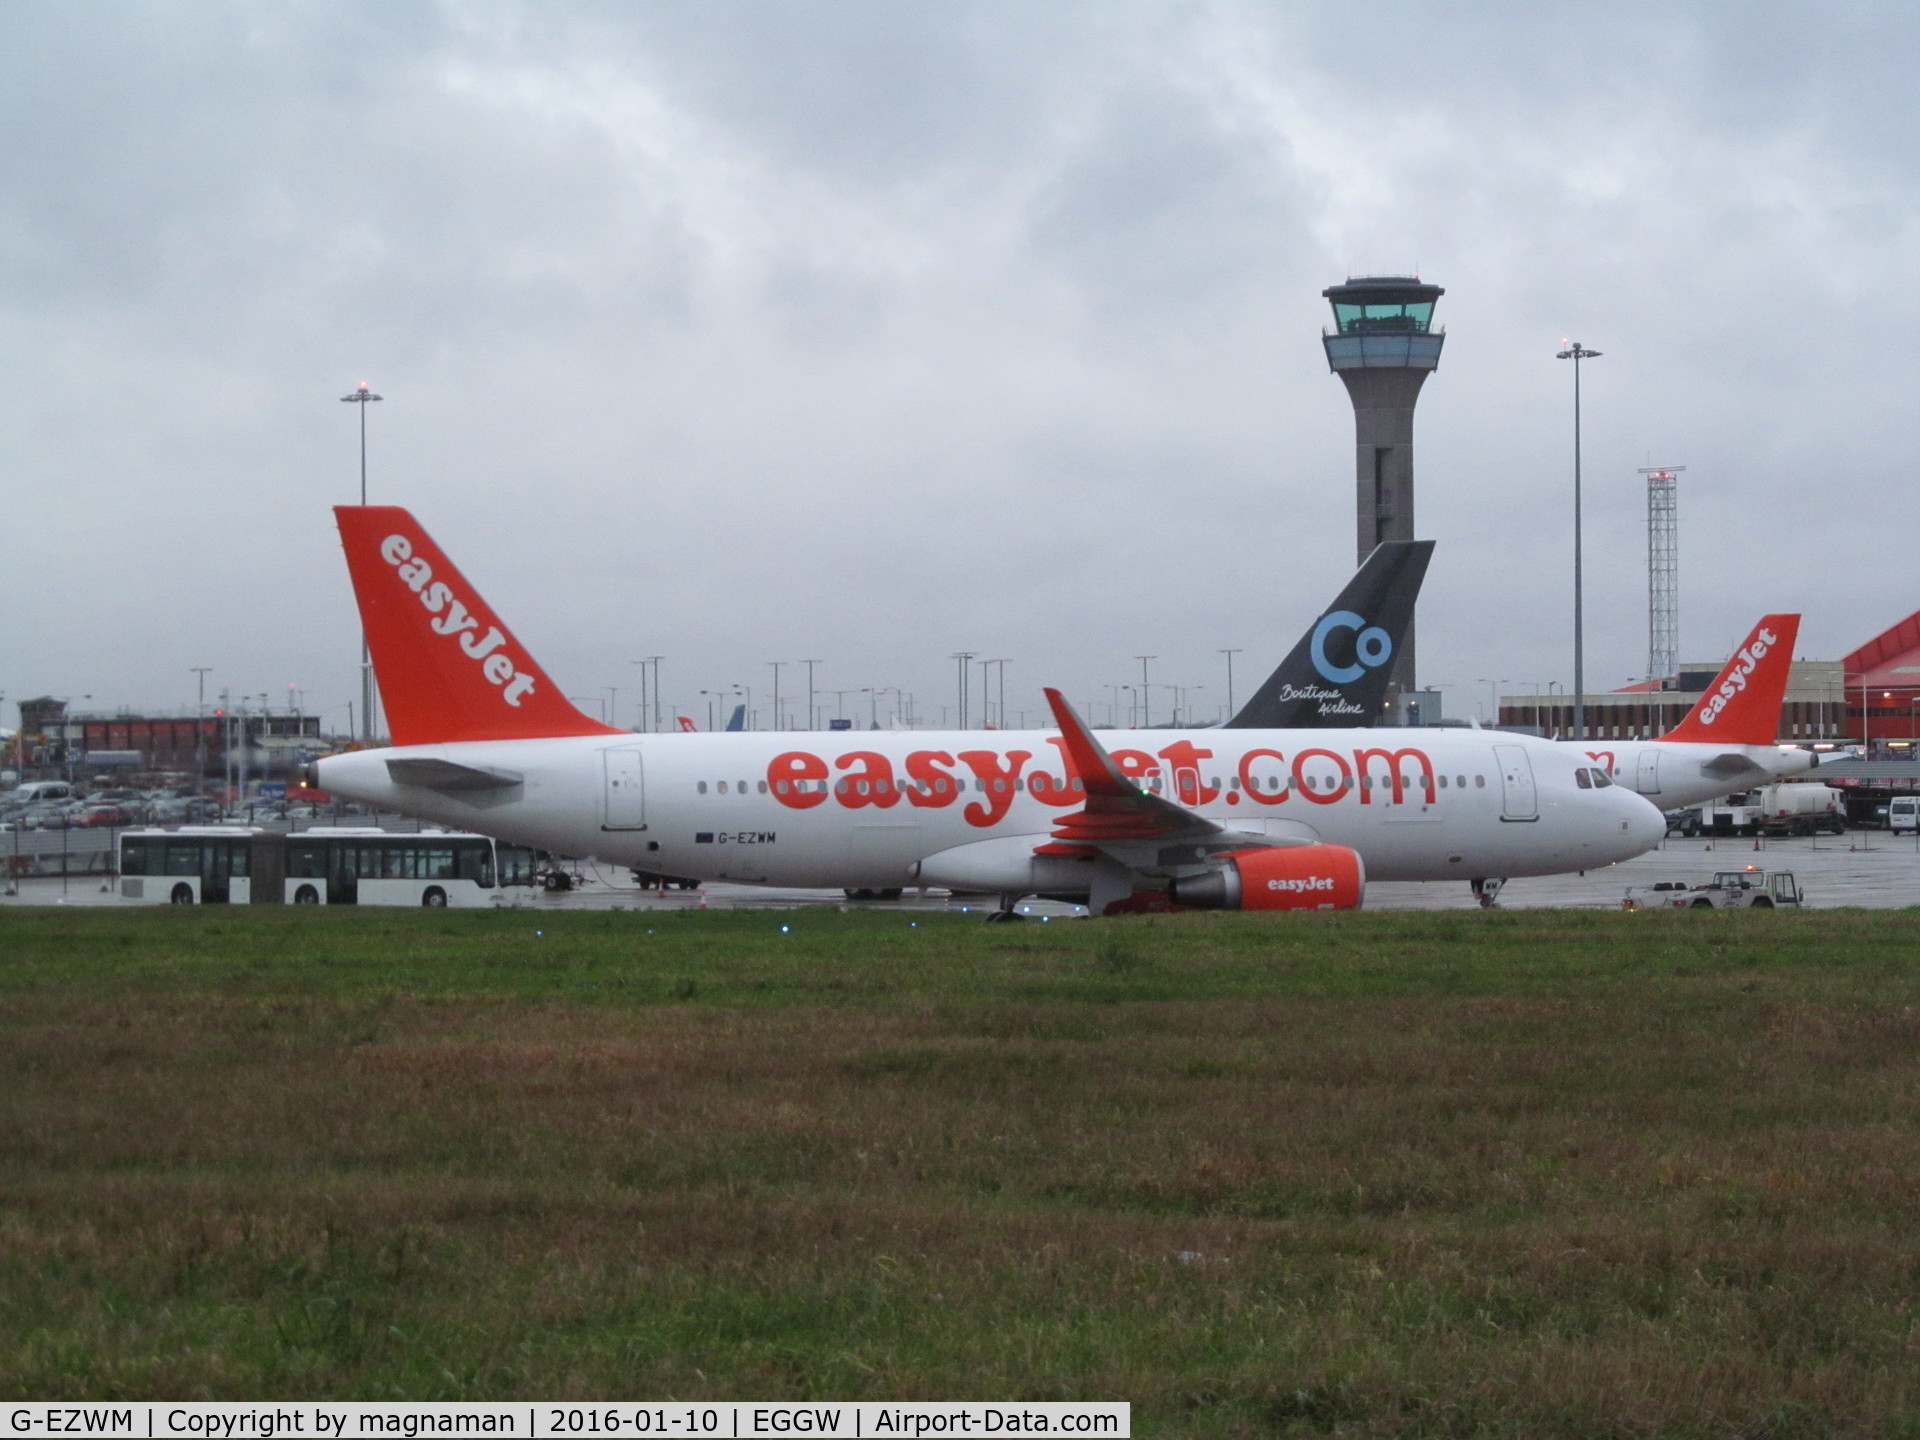 G-EZWM, 2013 Airbus A320-214 C/N 5739, taxying in